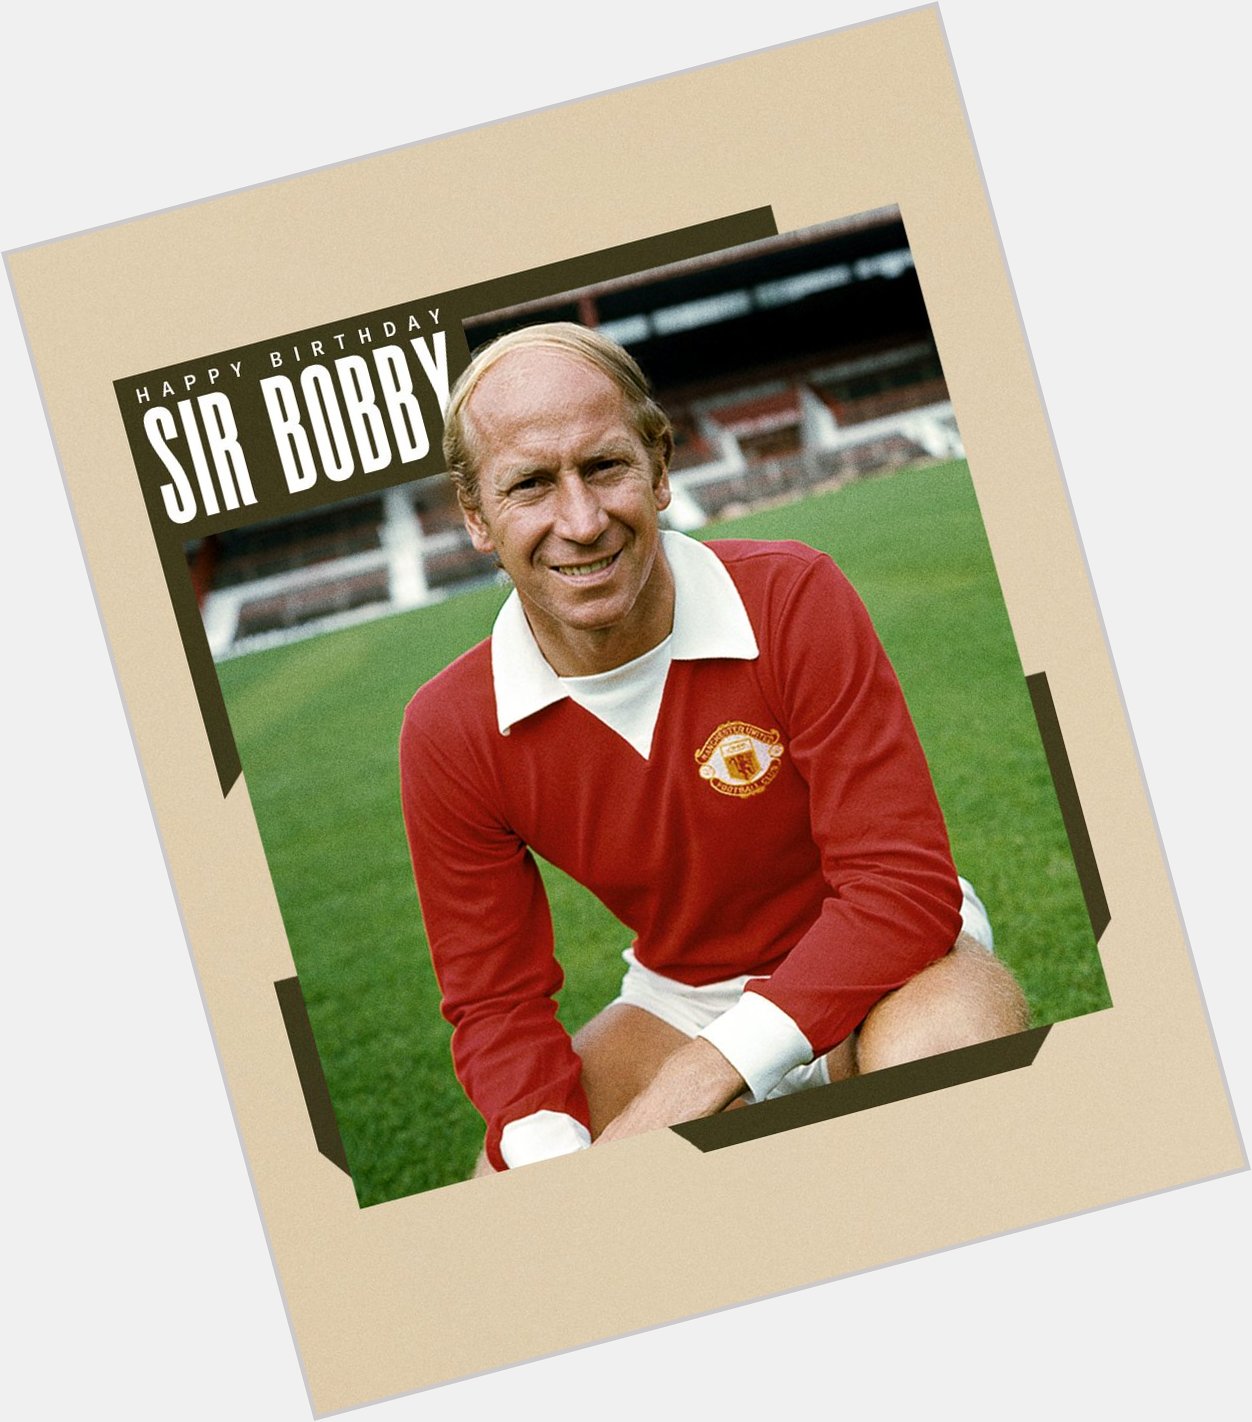 The man who epitomizes Manchester United. Happy 85th birthday sir bobby Charlton 